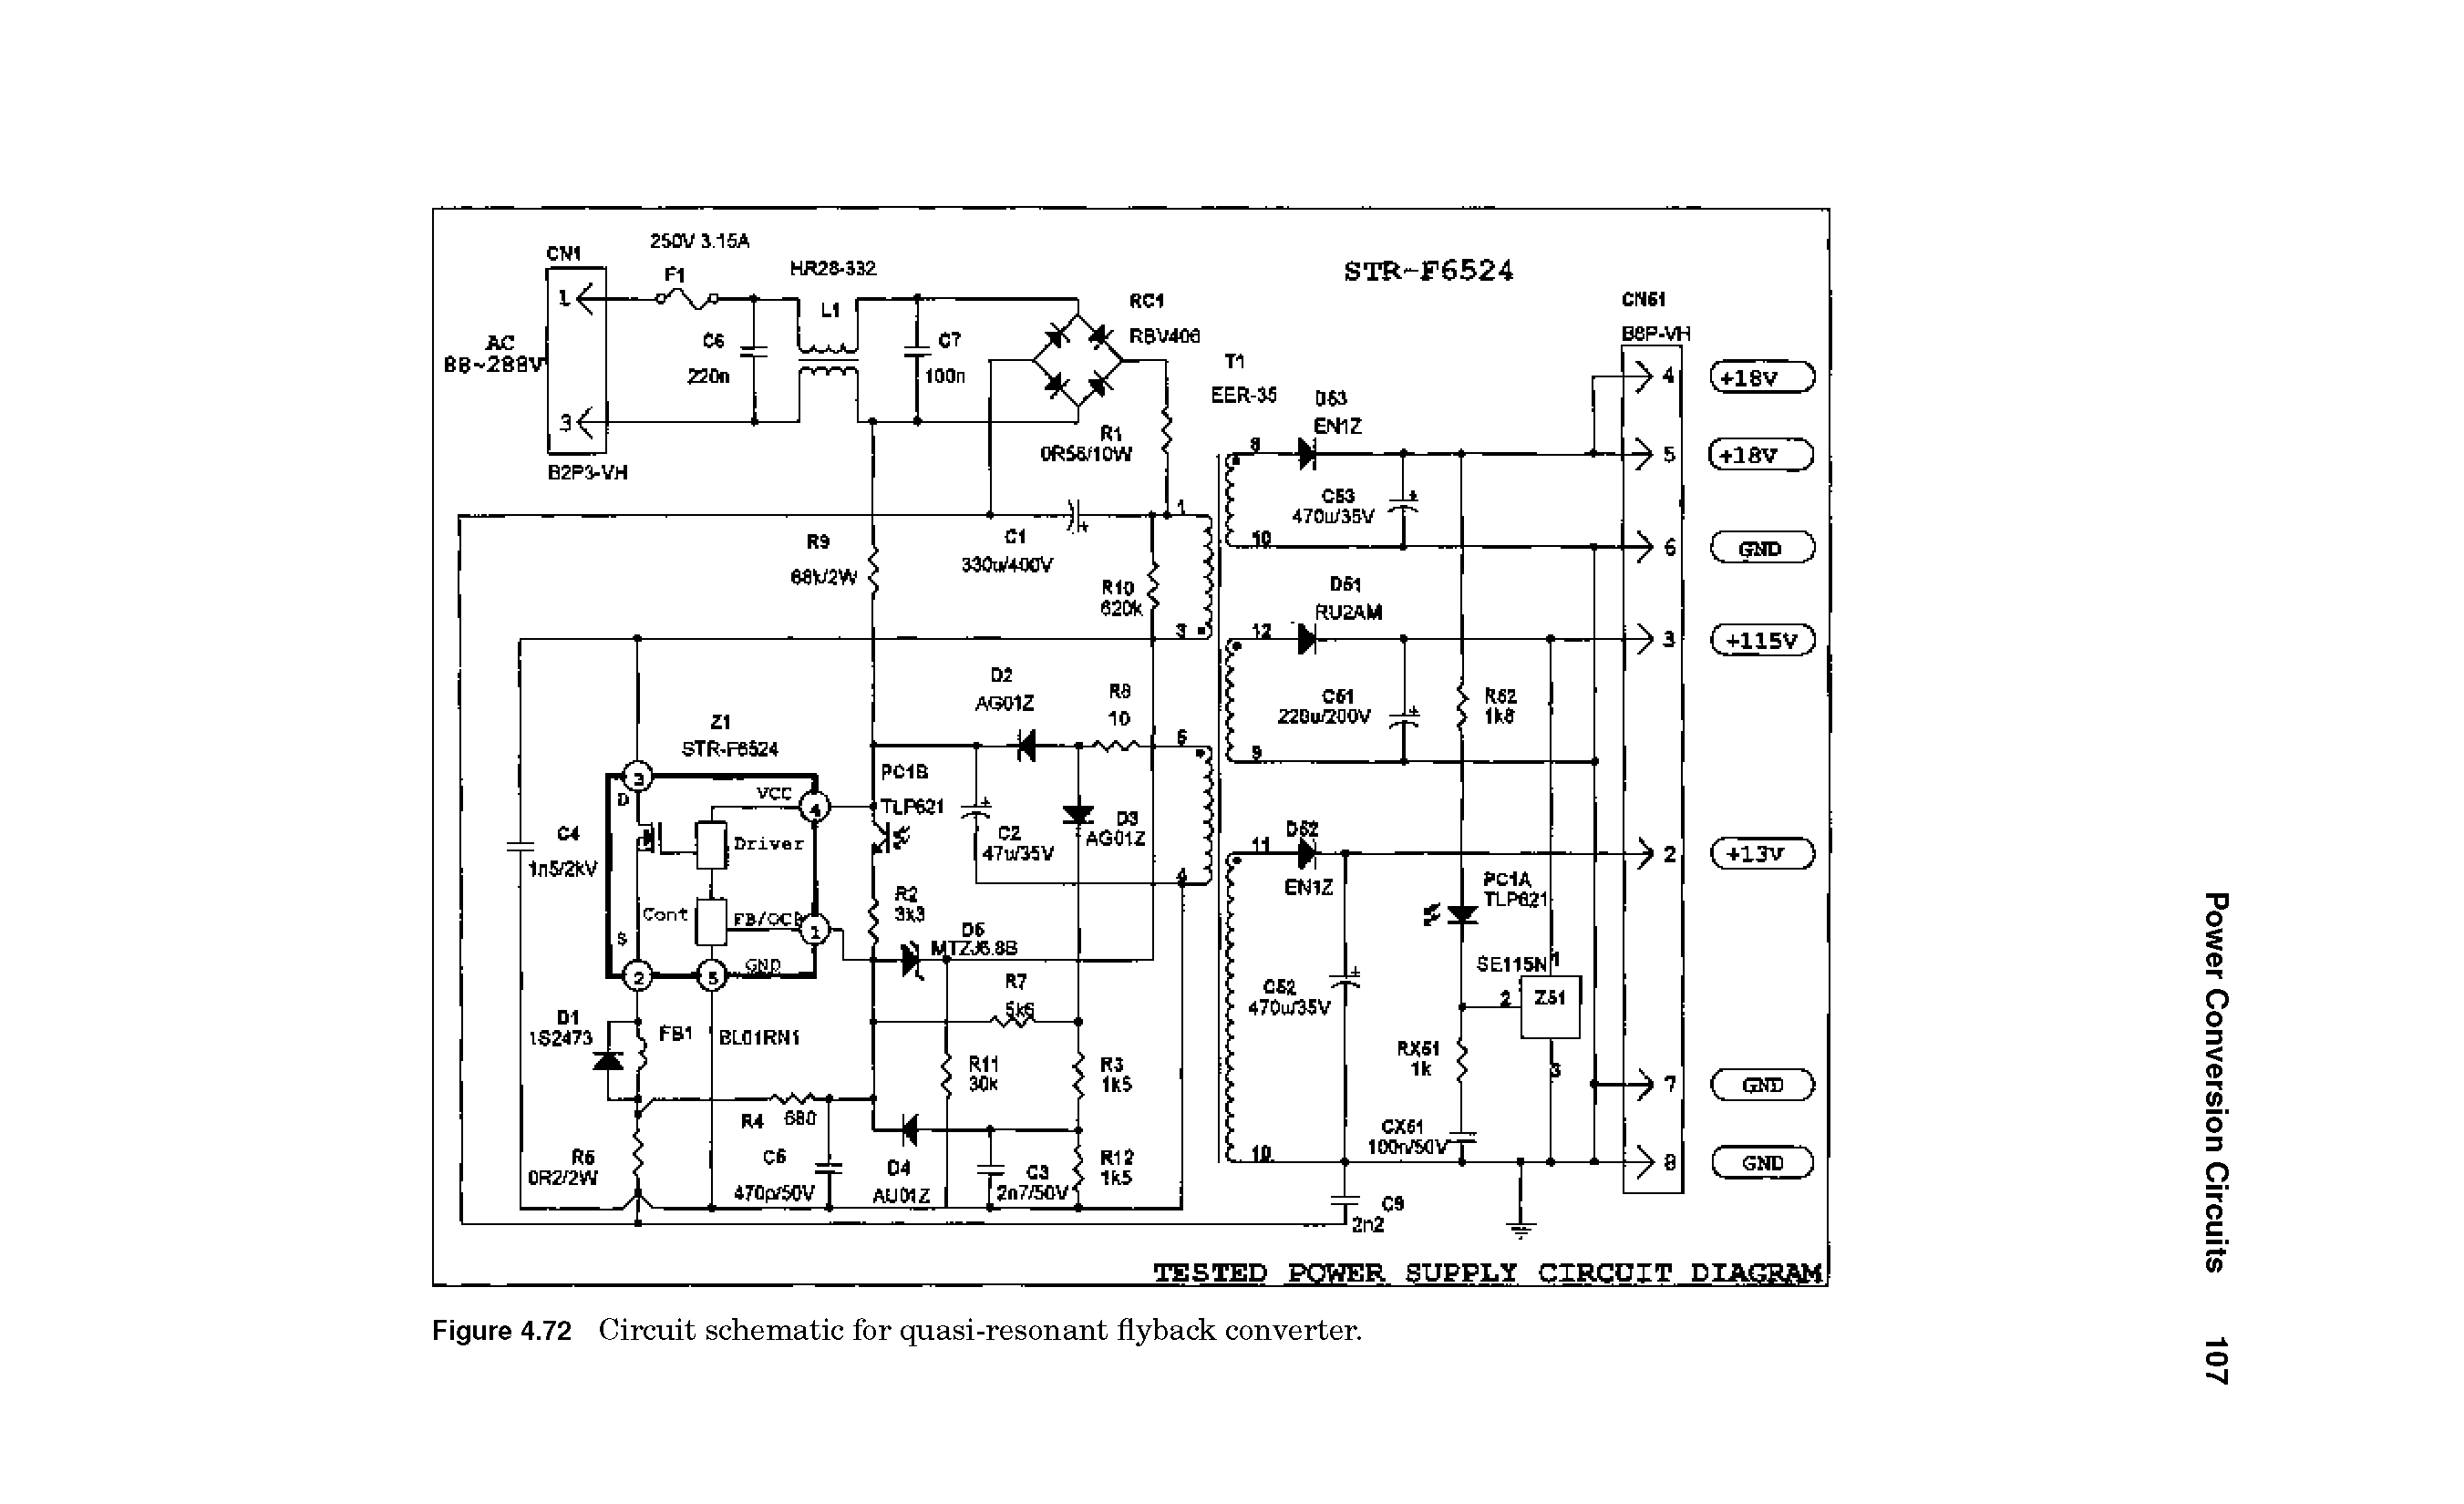 Figure 4.72 Circuit schematic for quasi-resonant flyback converter.